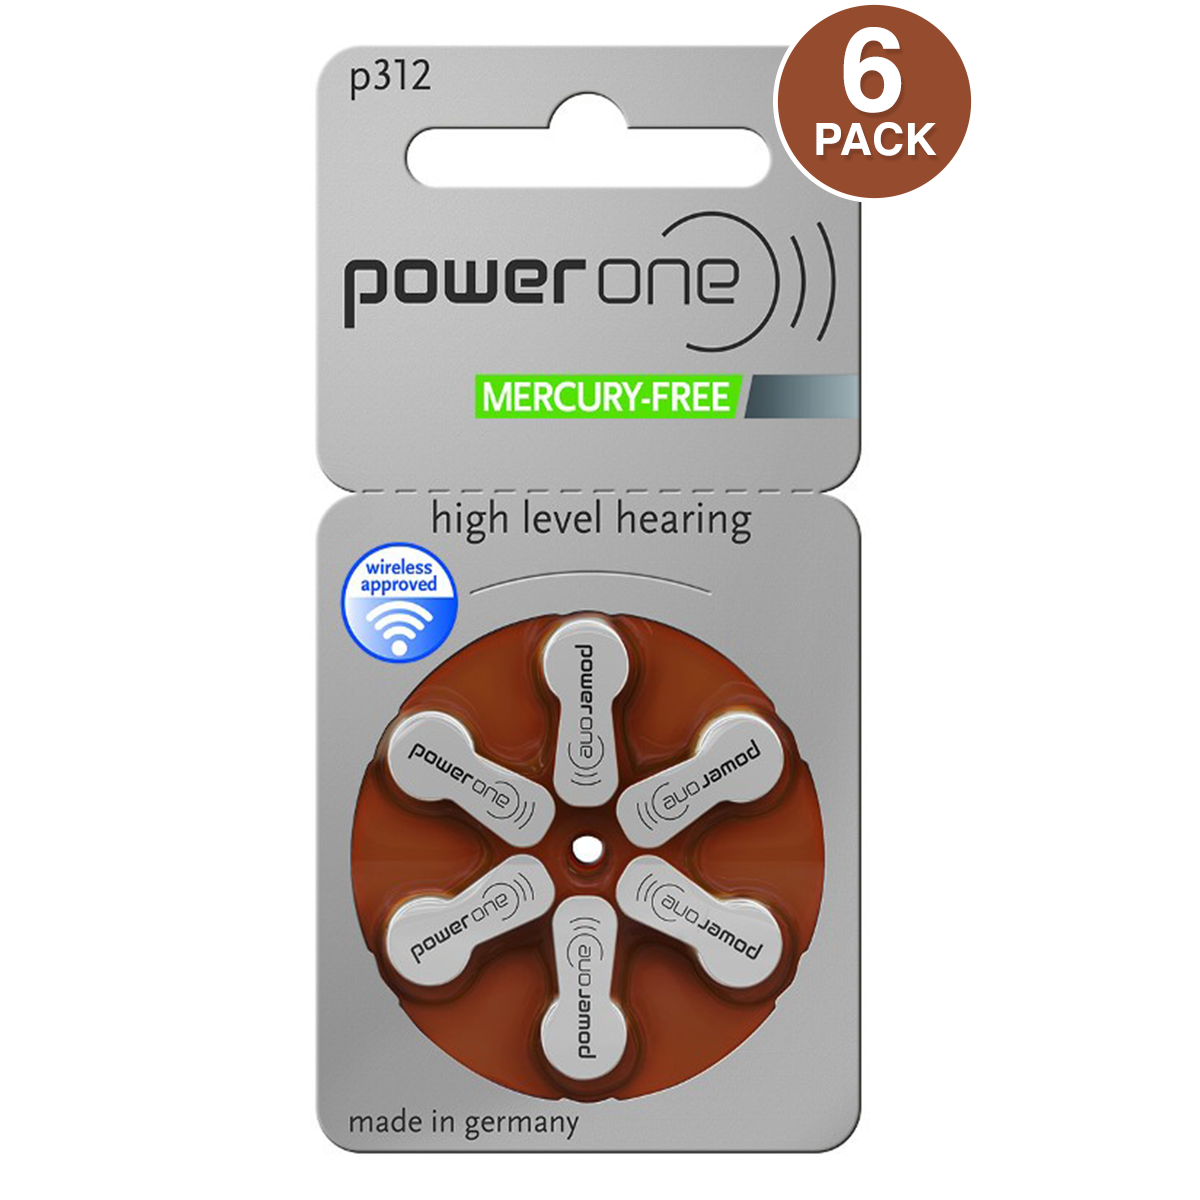 Power One Hearing Aid Battery, Size P312, Mercury-Free (6 pcs.)